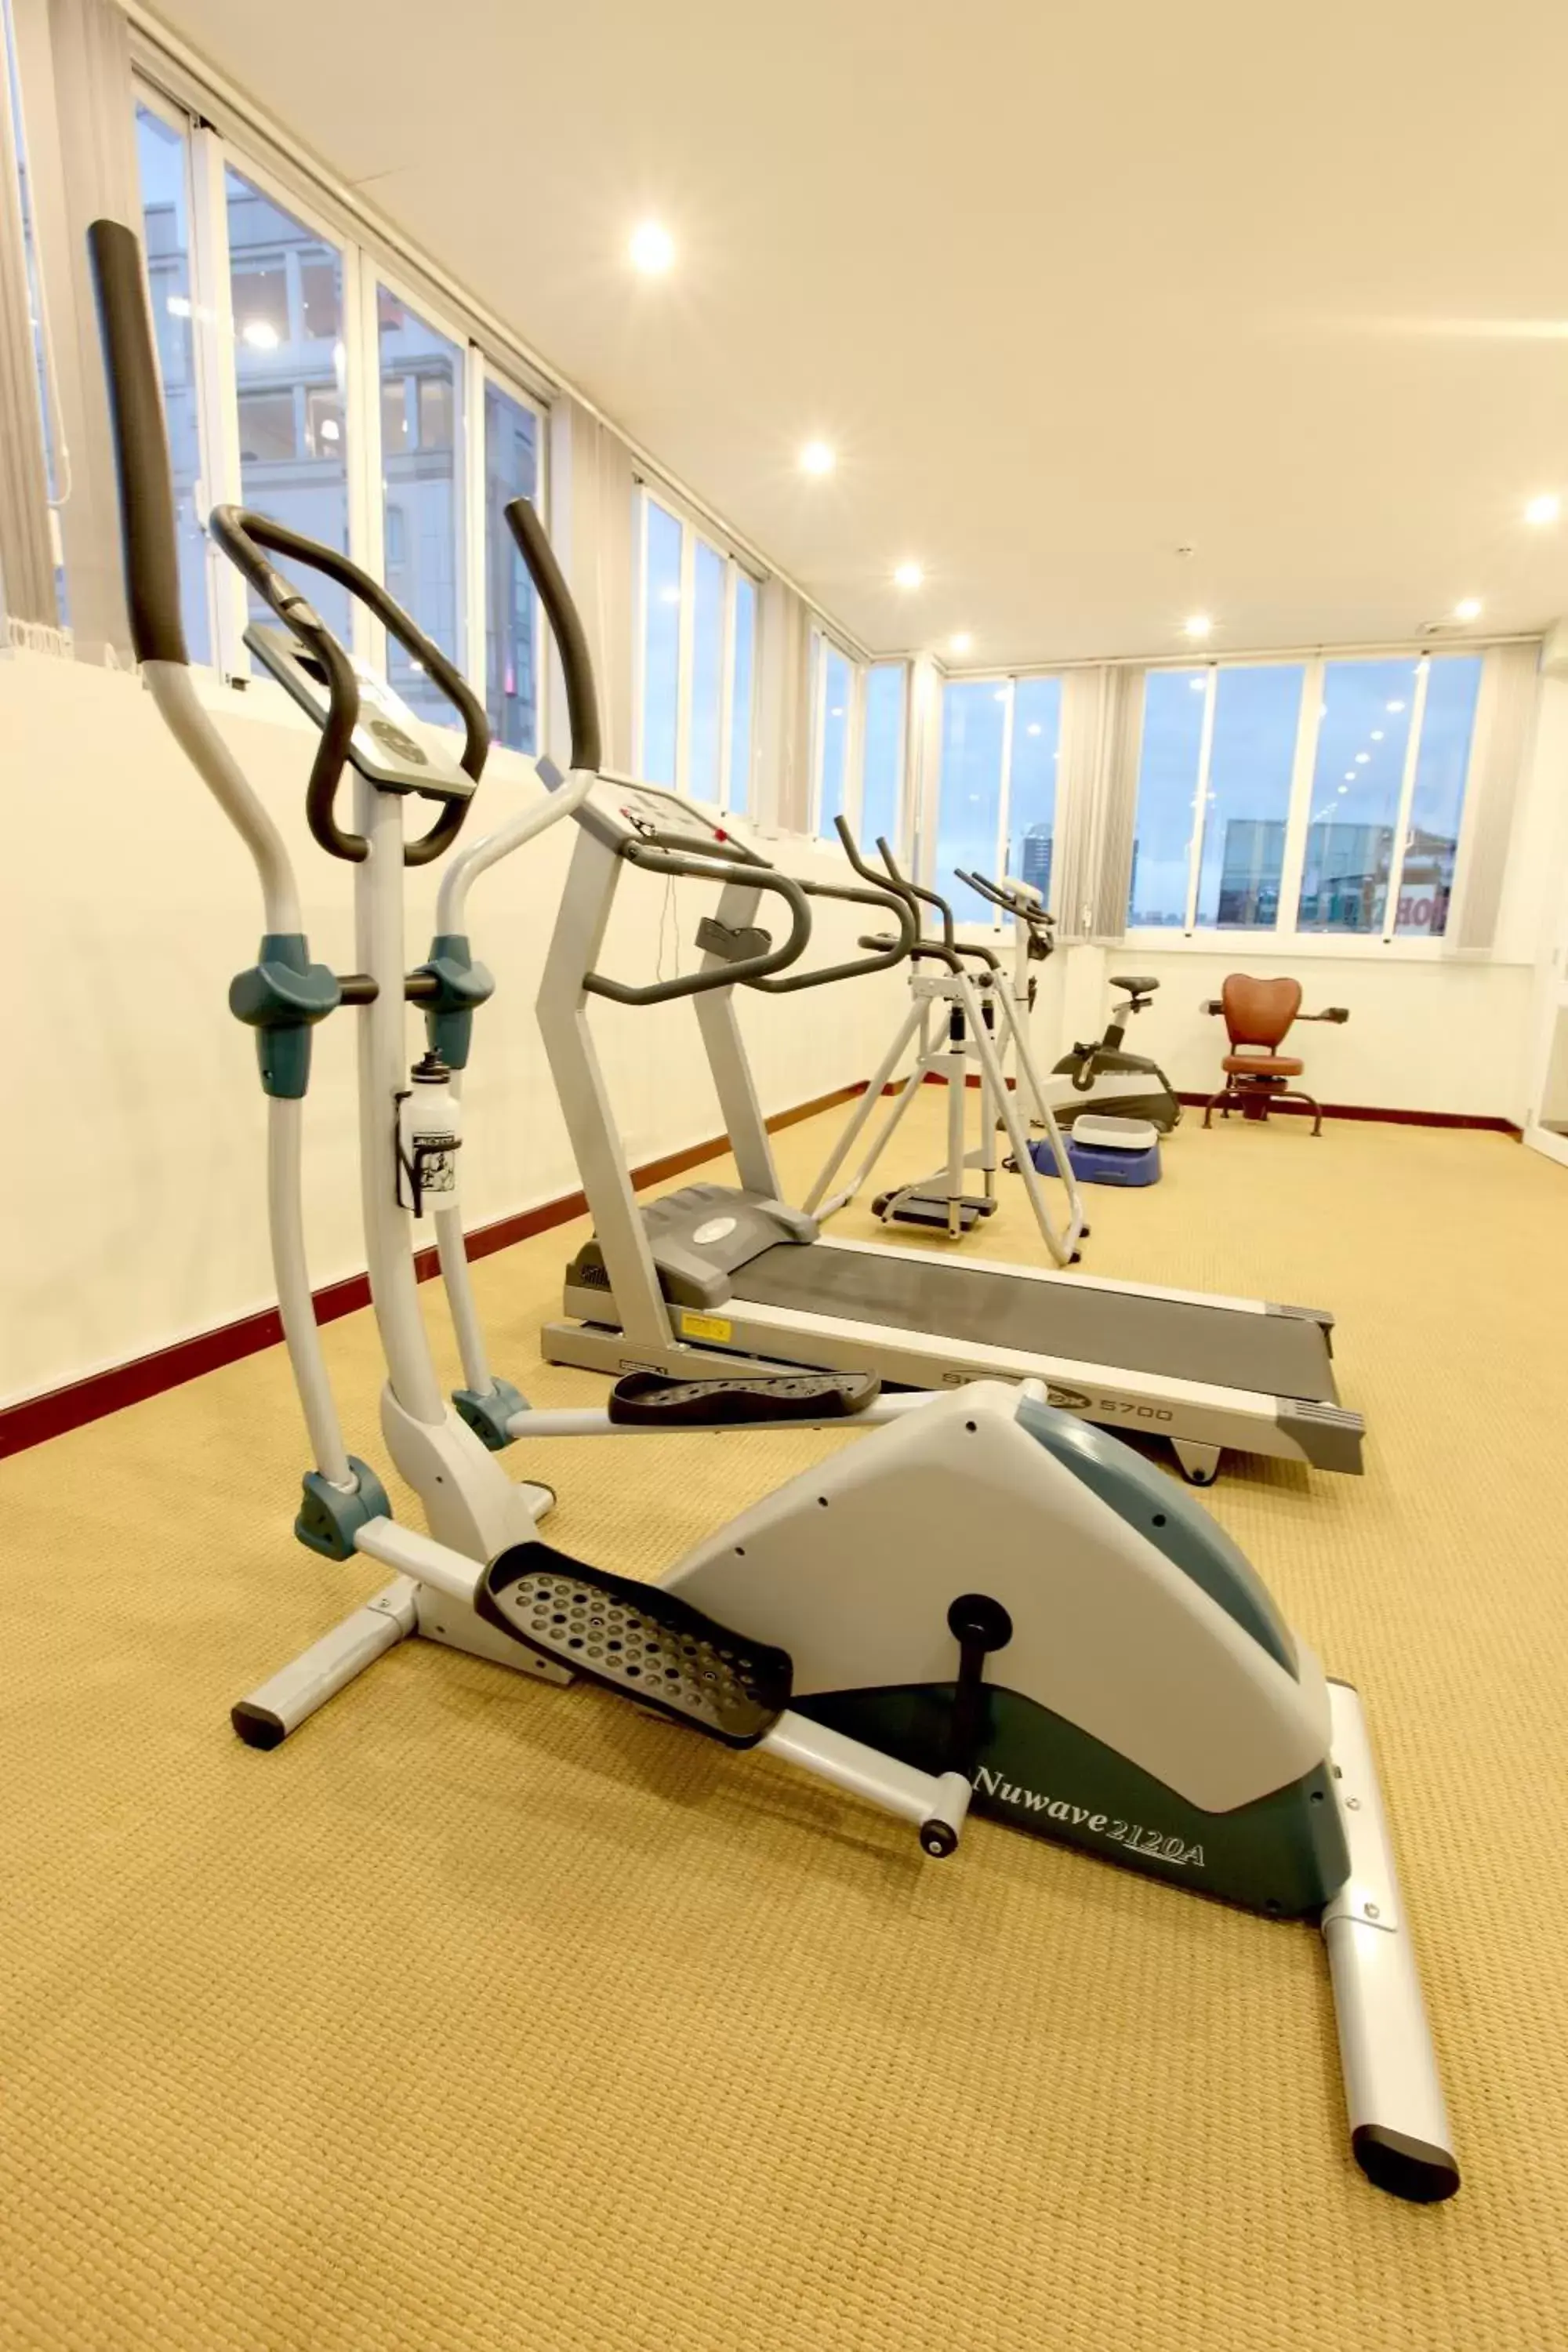 Fitness centre/facilities, Fitness Center/Facilities in Sanouva Saigon Hotel